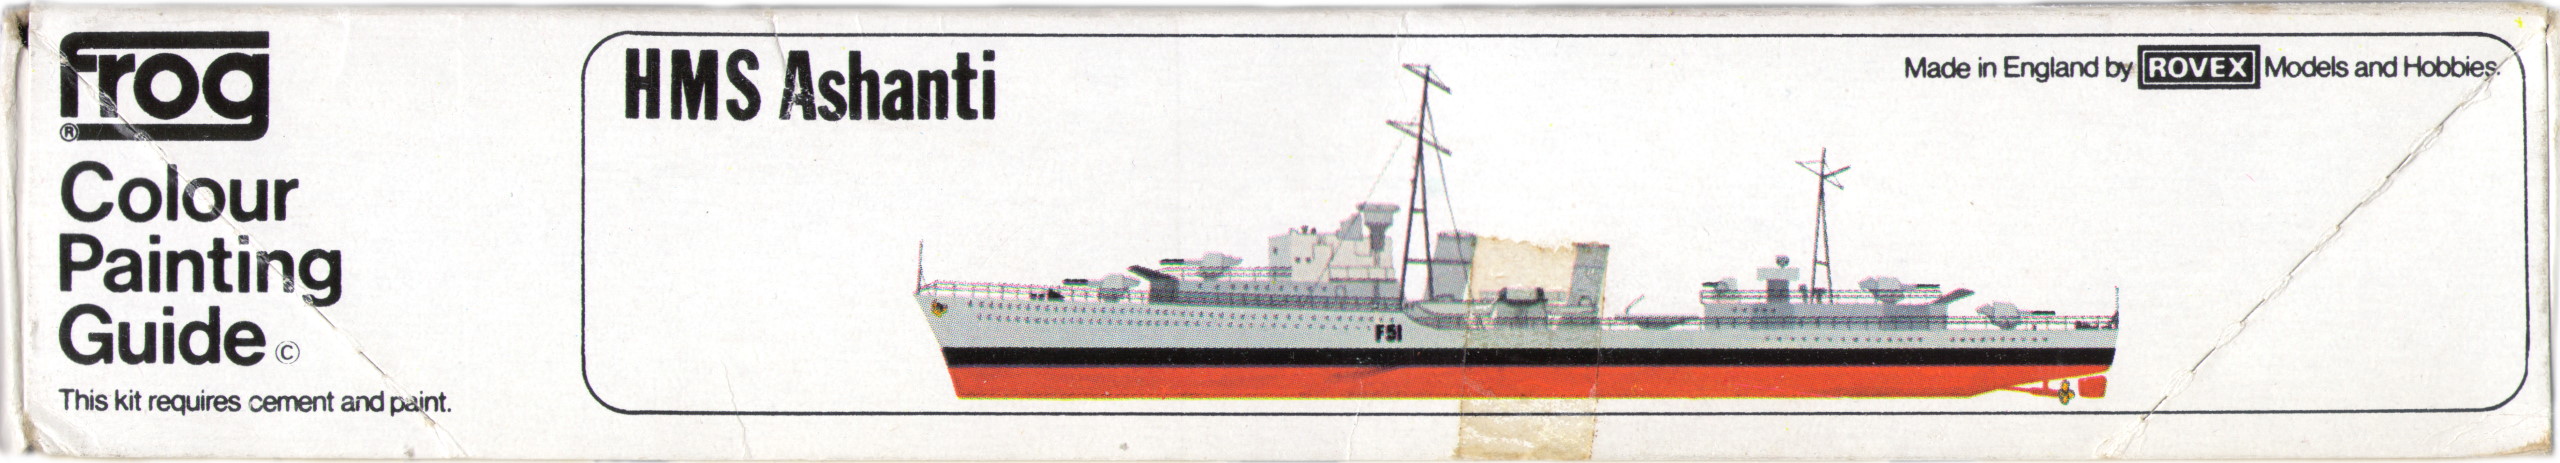 FROG F123 HMS Ashanti destroyer, Rovex Models&Hobbies Ltd, 1975